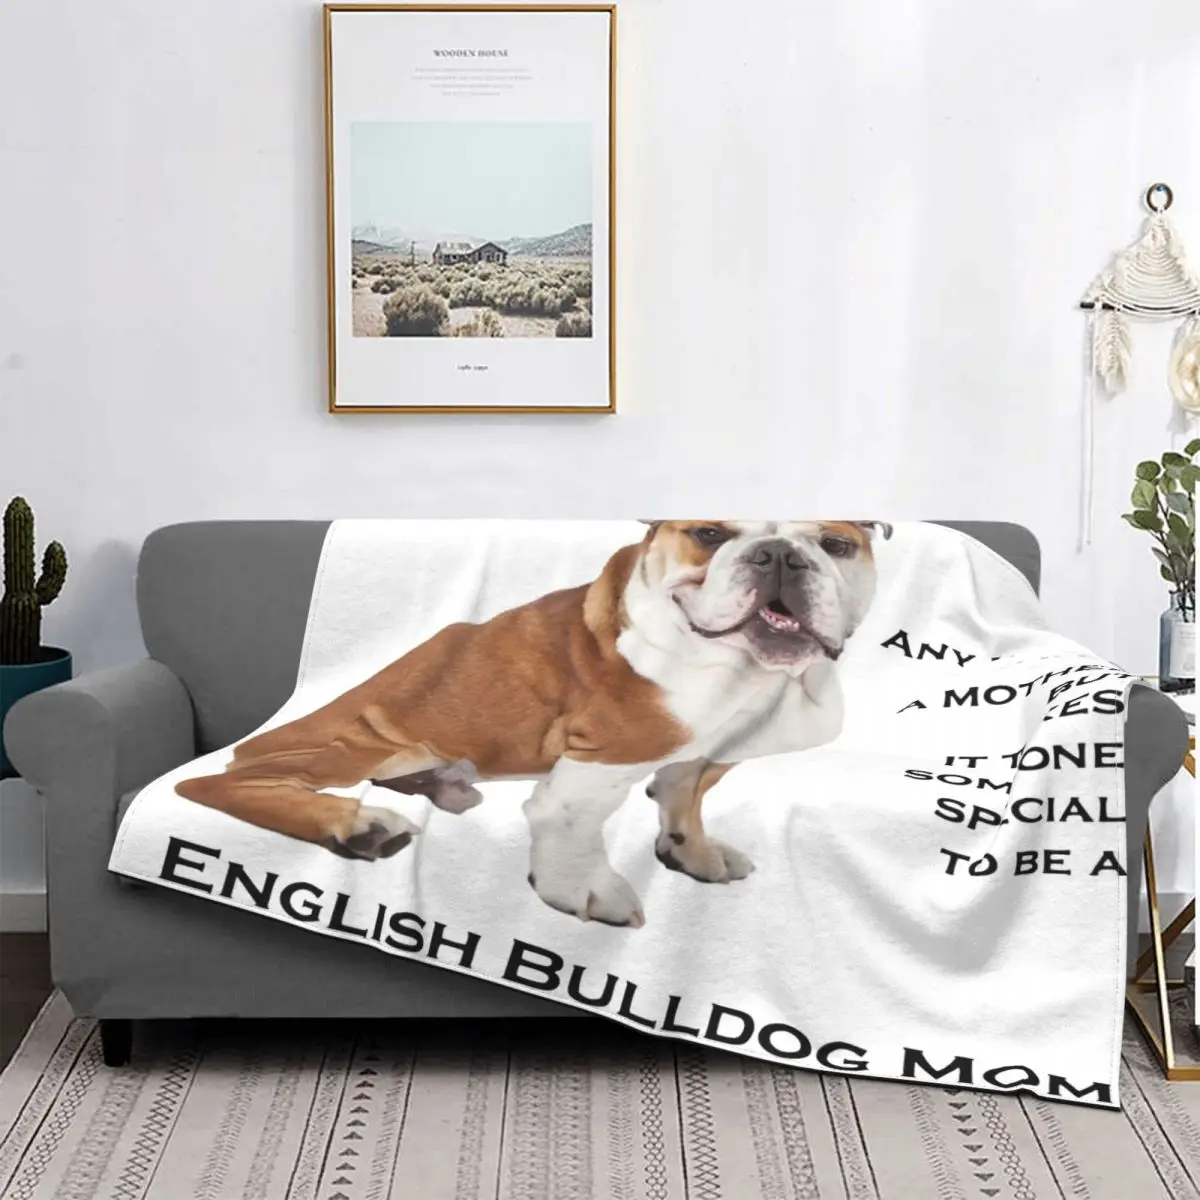 English Bulldog Mom Dog Blankets Fleece Printed Puppy Portable Warm Throw Blankets for Home Office Bedspread